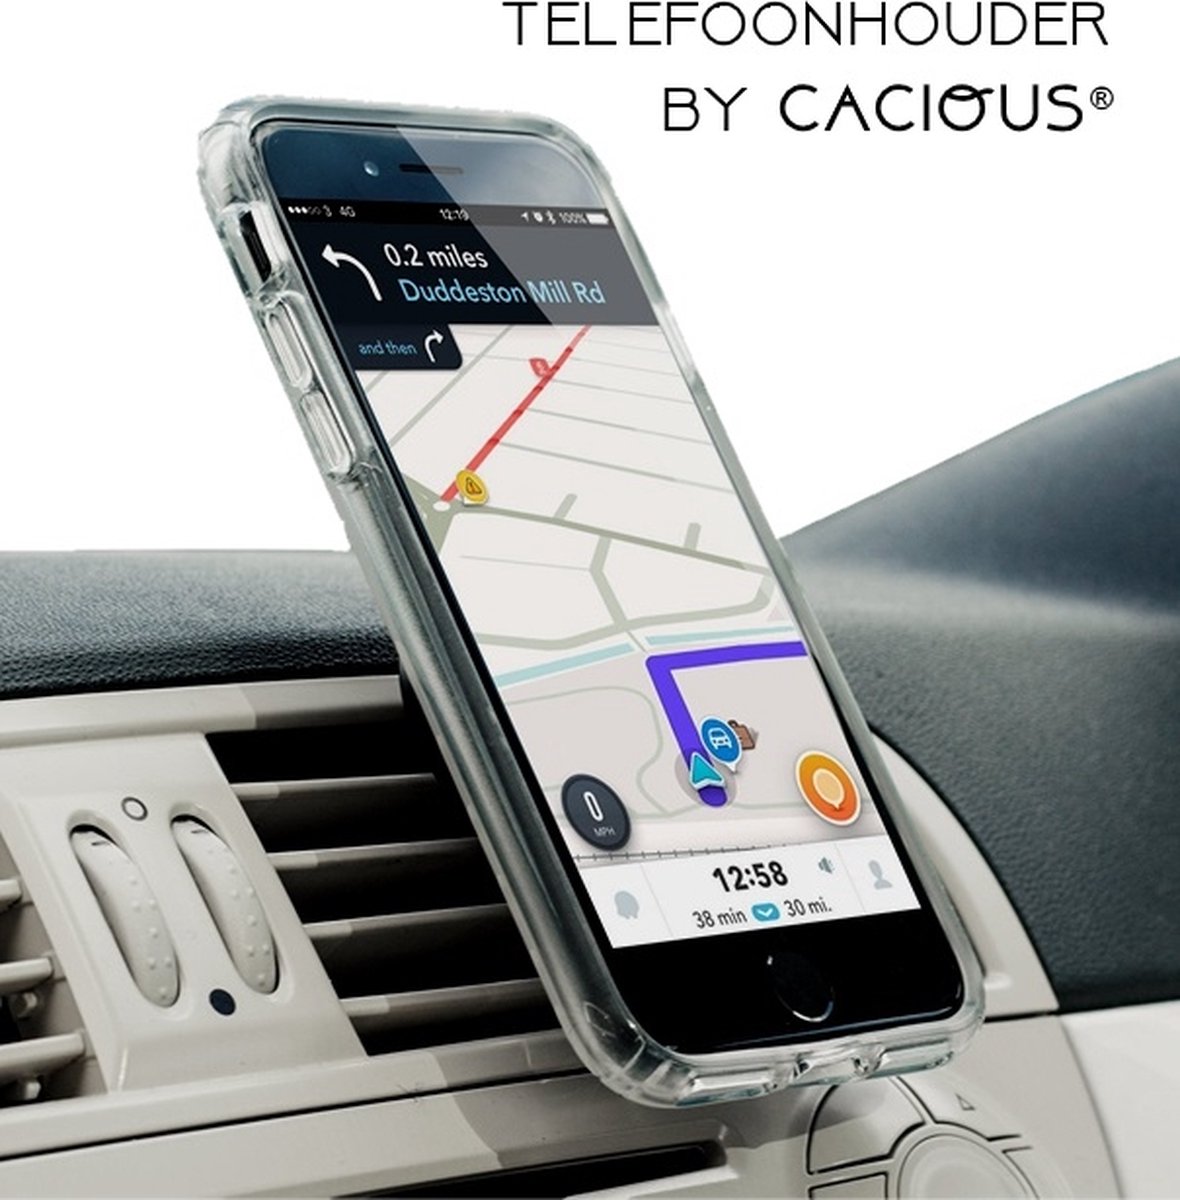 Cacious Telefoon Houder met Magnetische bevestiging - Universele autohouder o.a. voor Samsung Galaxy S8 / S8+ en iPhone 7 / 7 Plus - Cacious